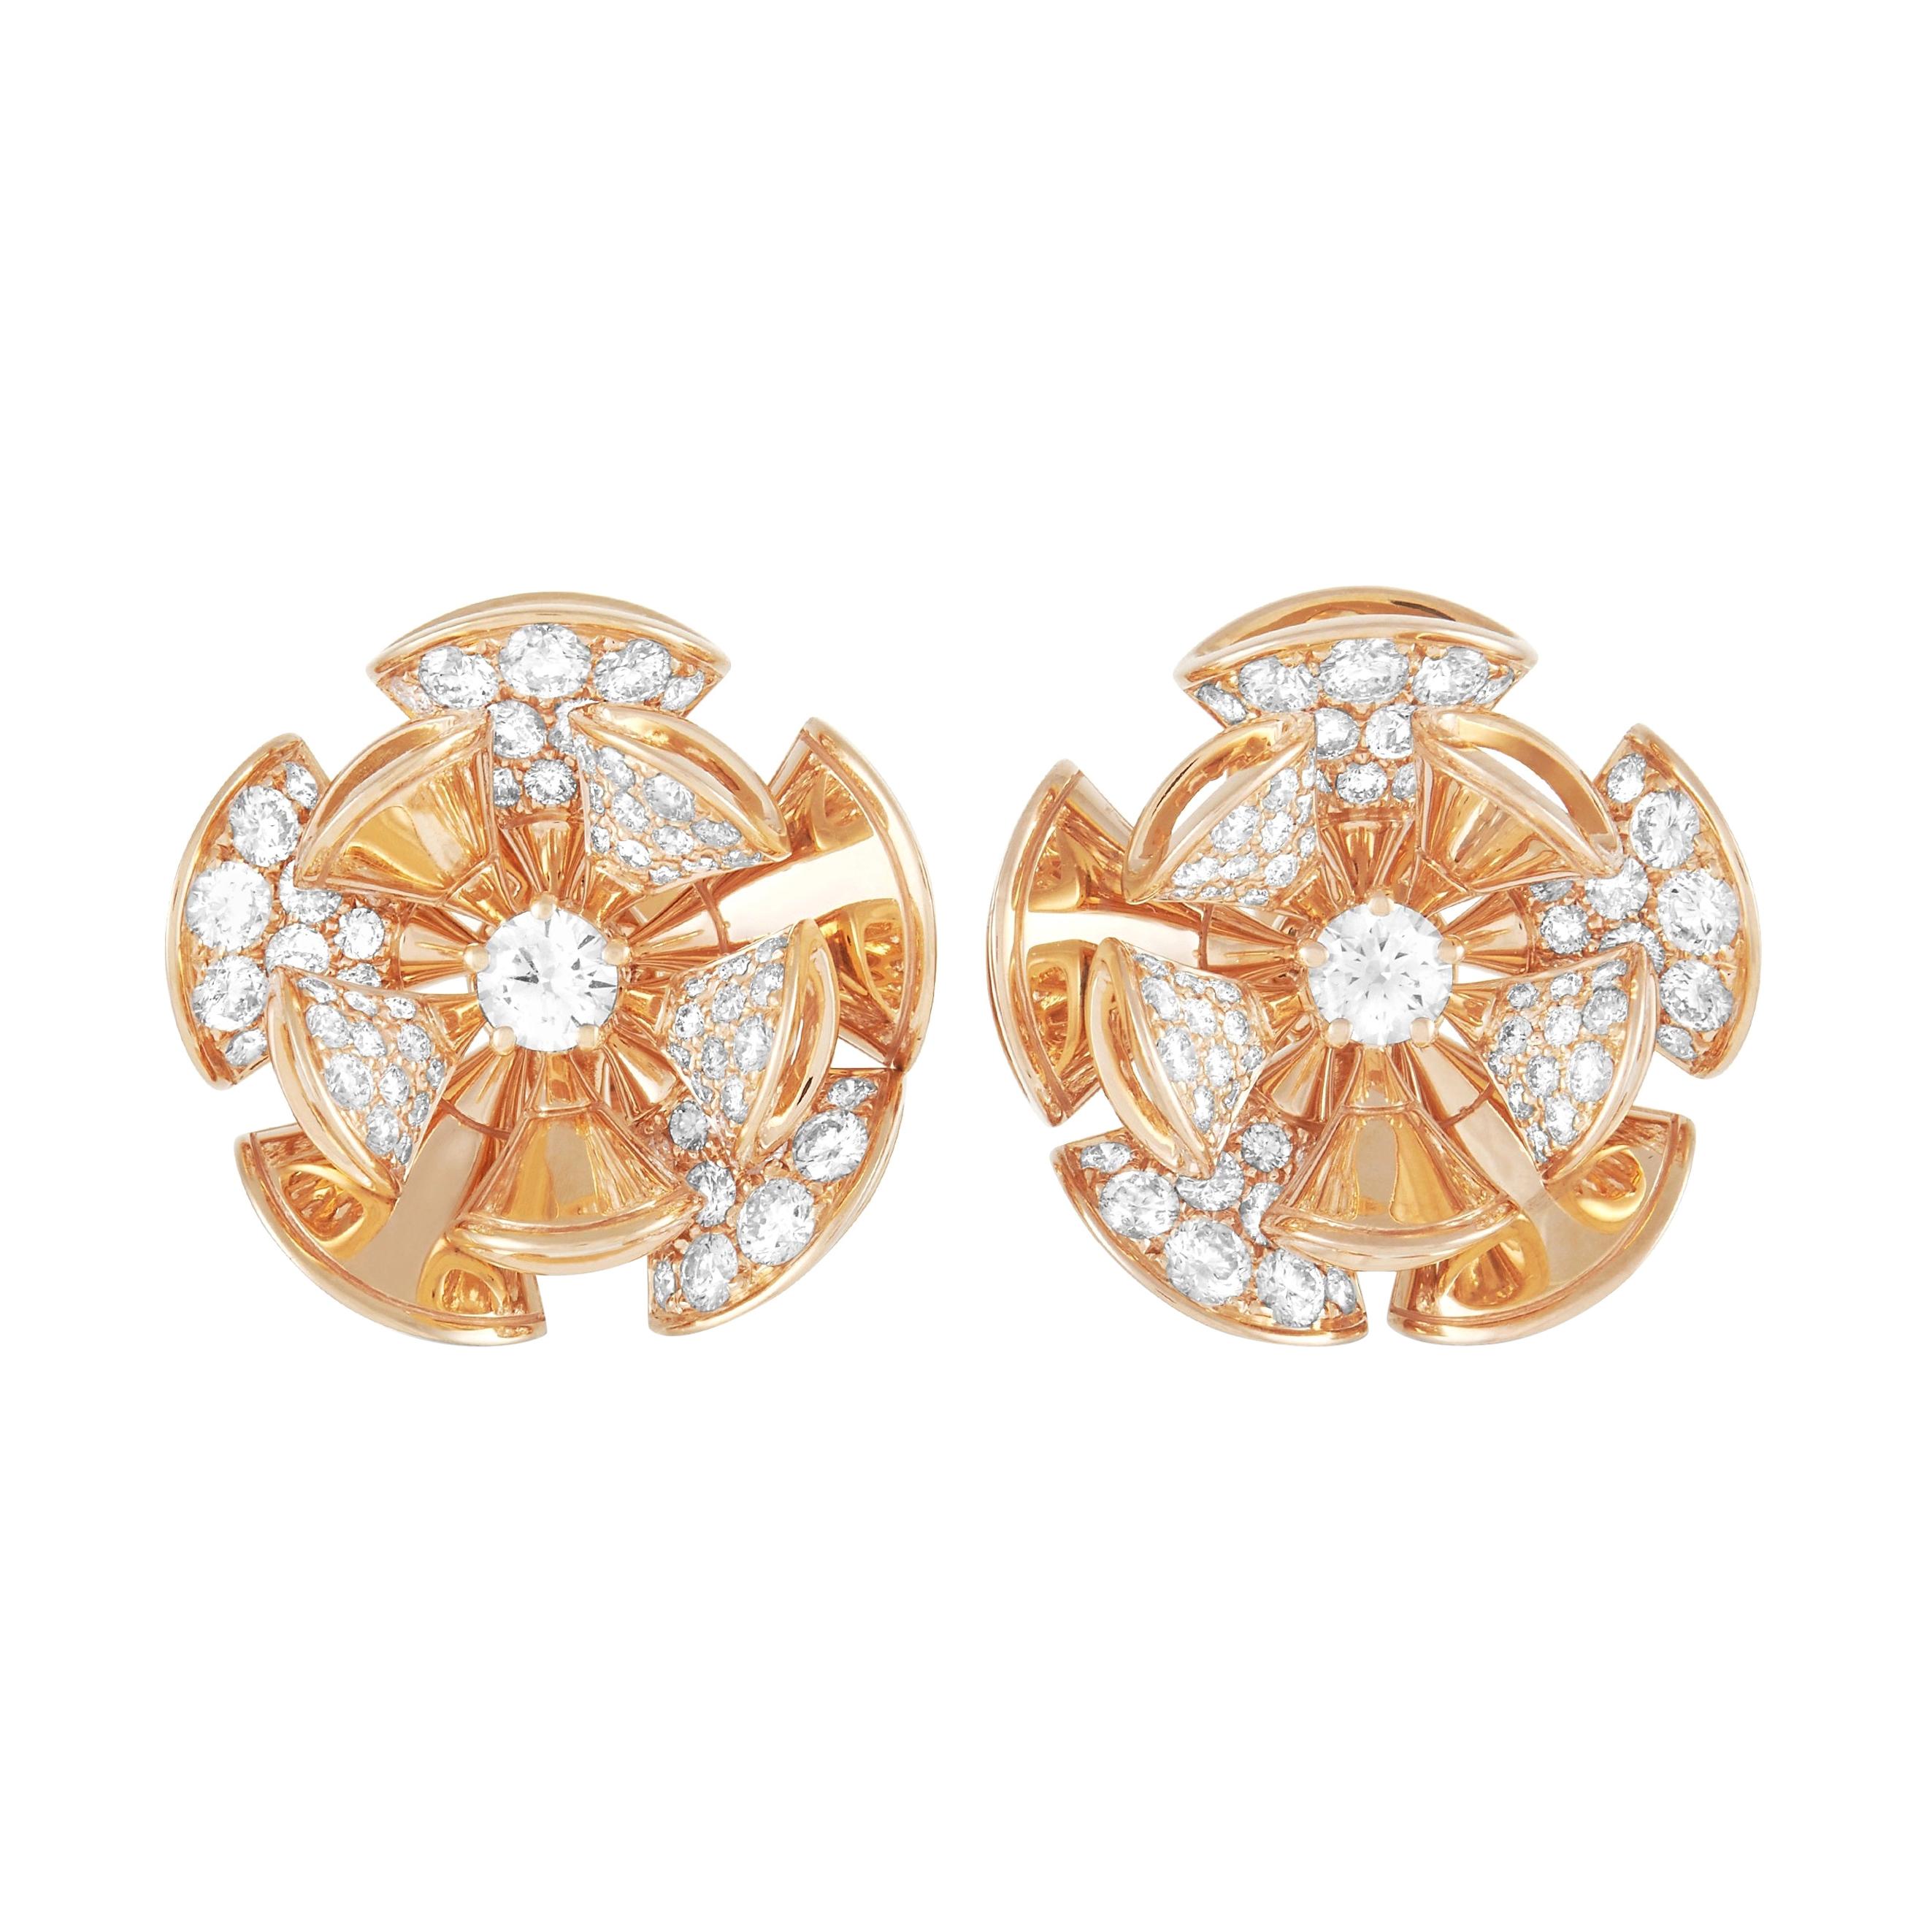 Bvlgari Divas' Dream Earrings in 18k Rose Gold and Diamonds - ShopStyle